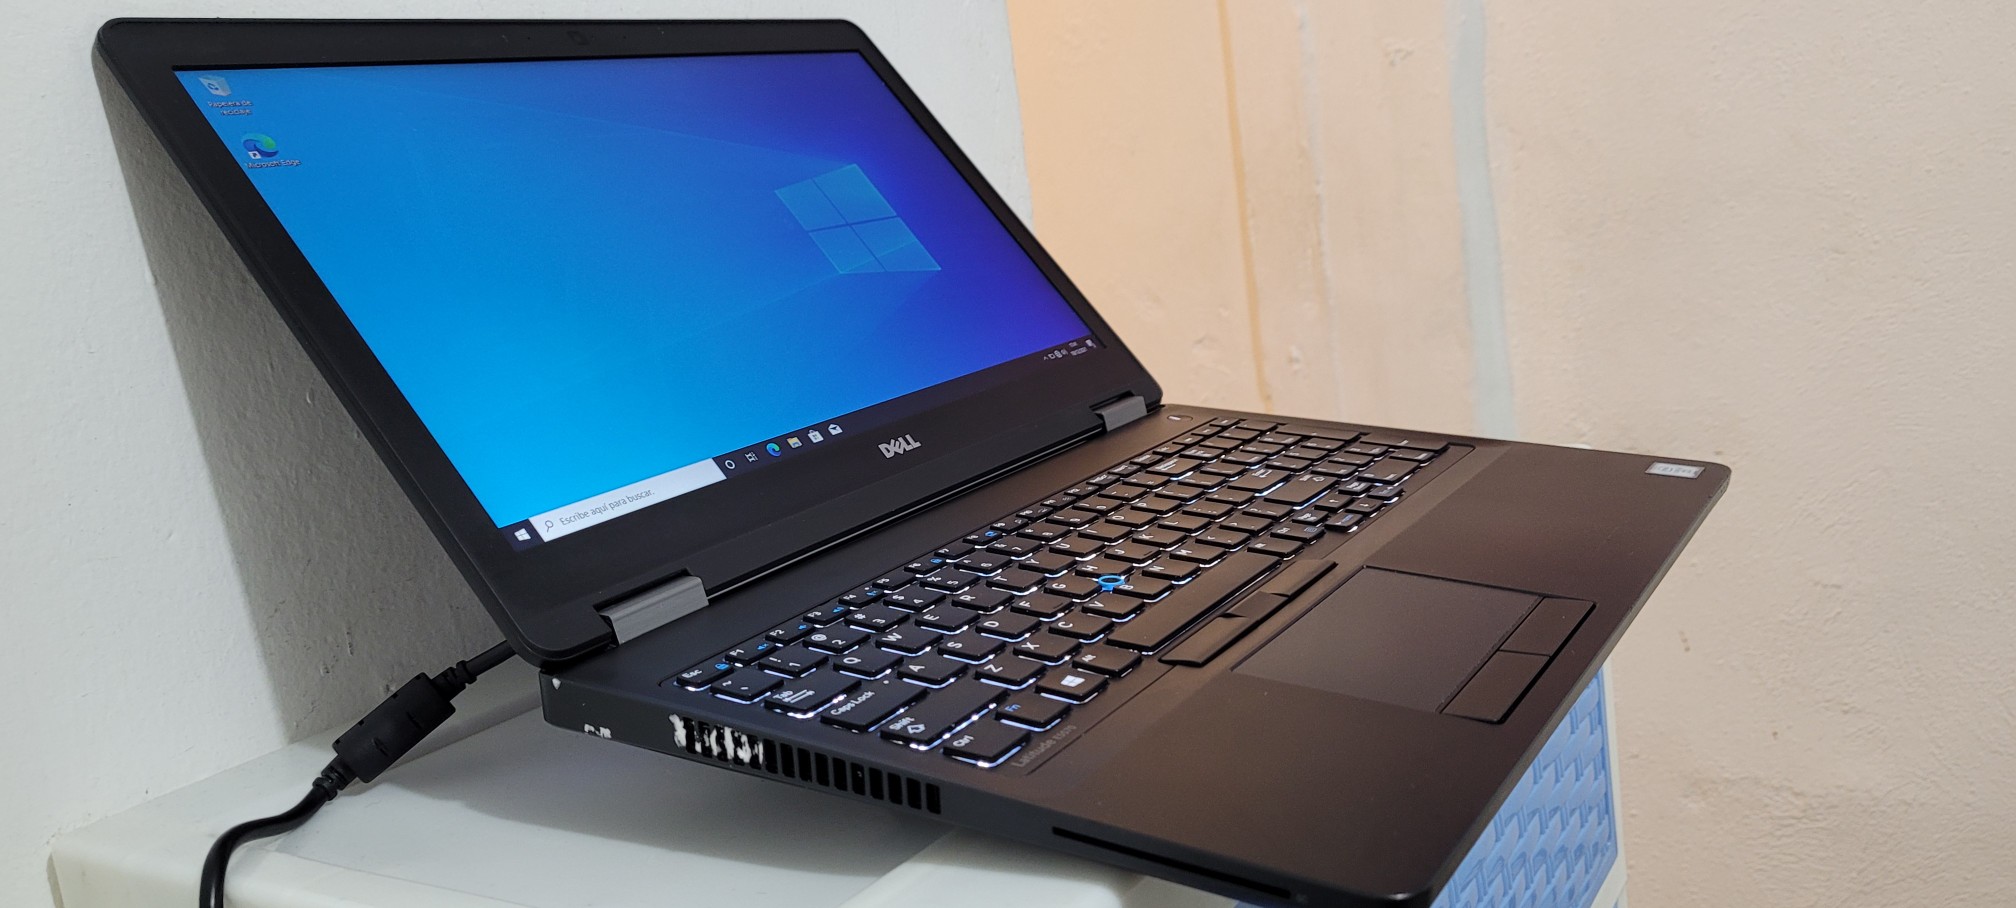 computadoras y laptops - Dell 5570 17 Pulg Core i5 6ta Gen Ram 8gb Disco 128gb SSD Y 500GB HD 1